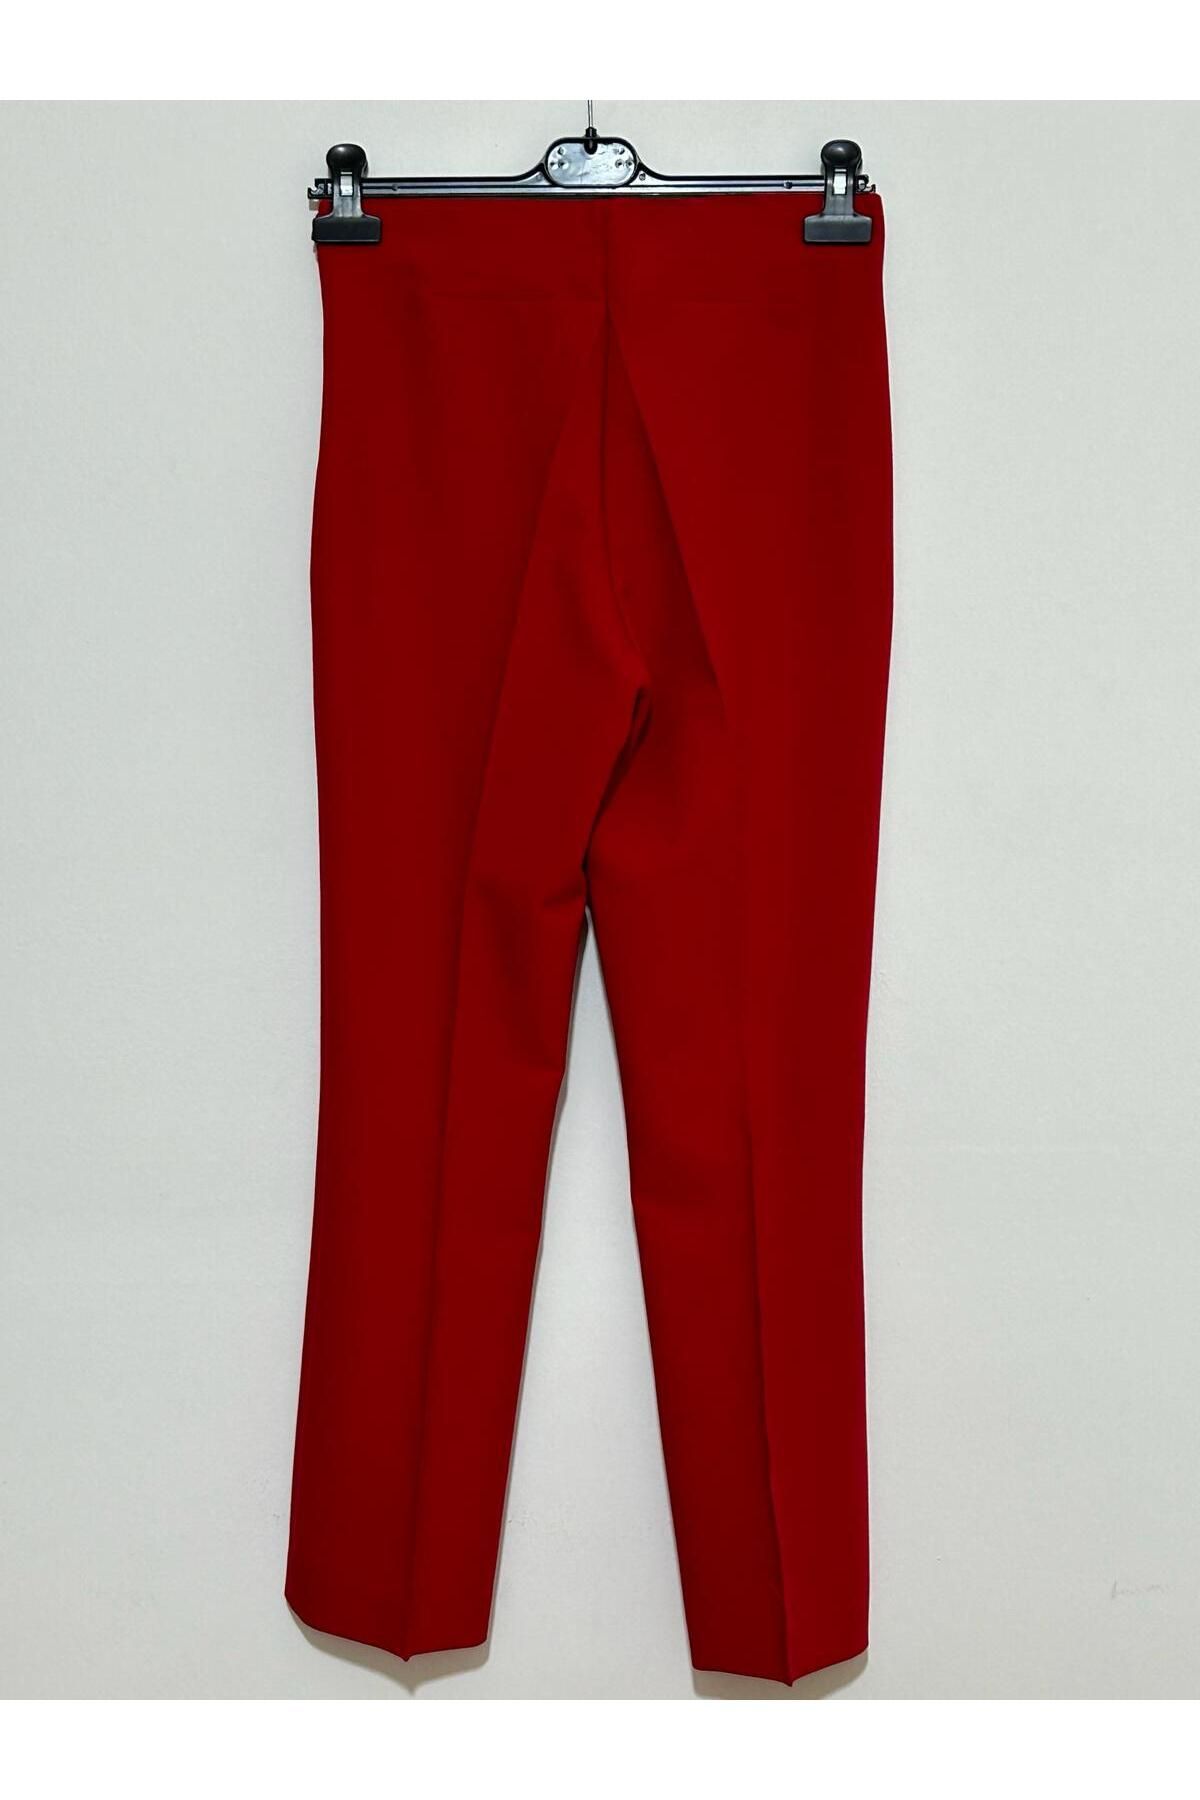 Ayhan Kırmızı Beli Lastikli Pantolon